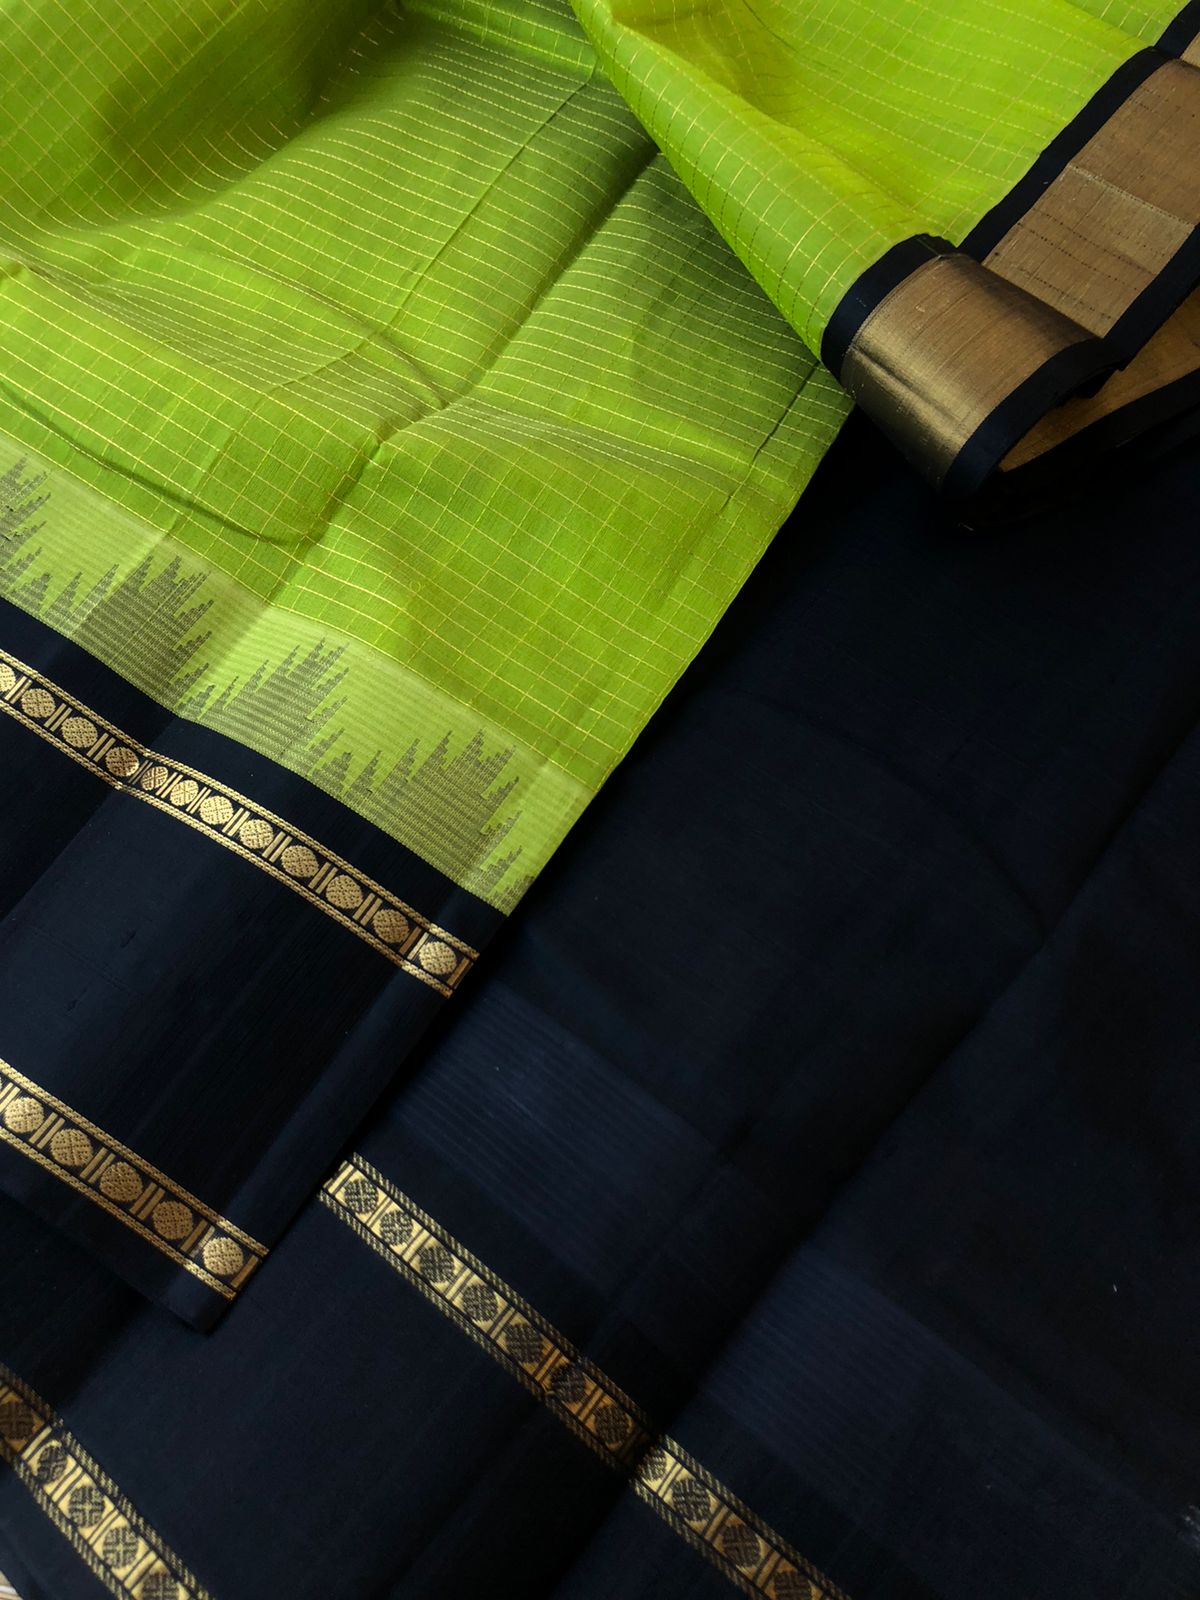 Kattams on Korvai Silk Cotton - pale green and black zari kattam